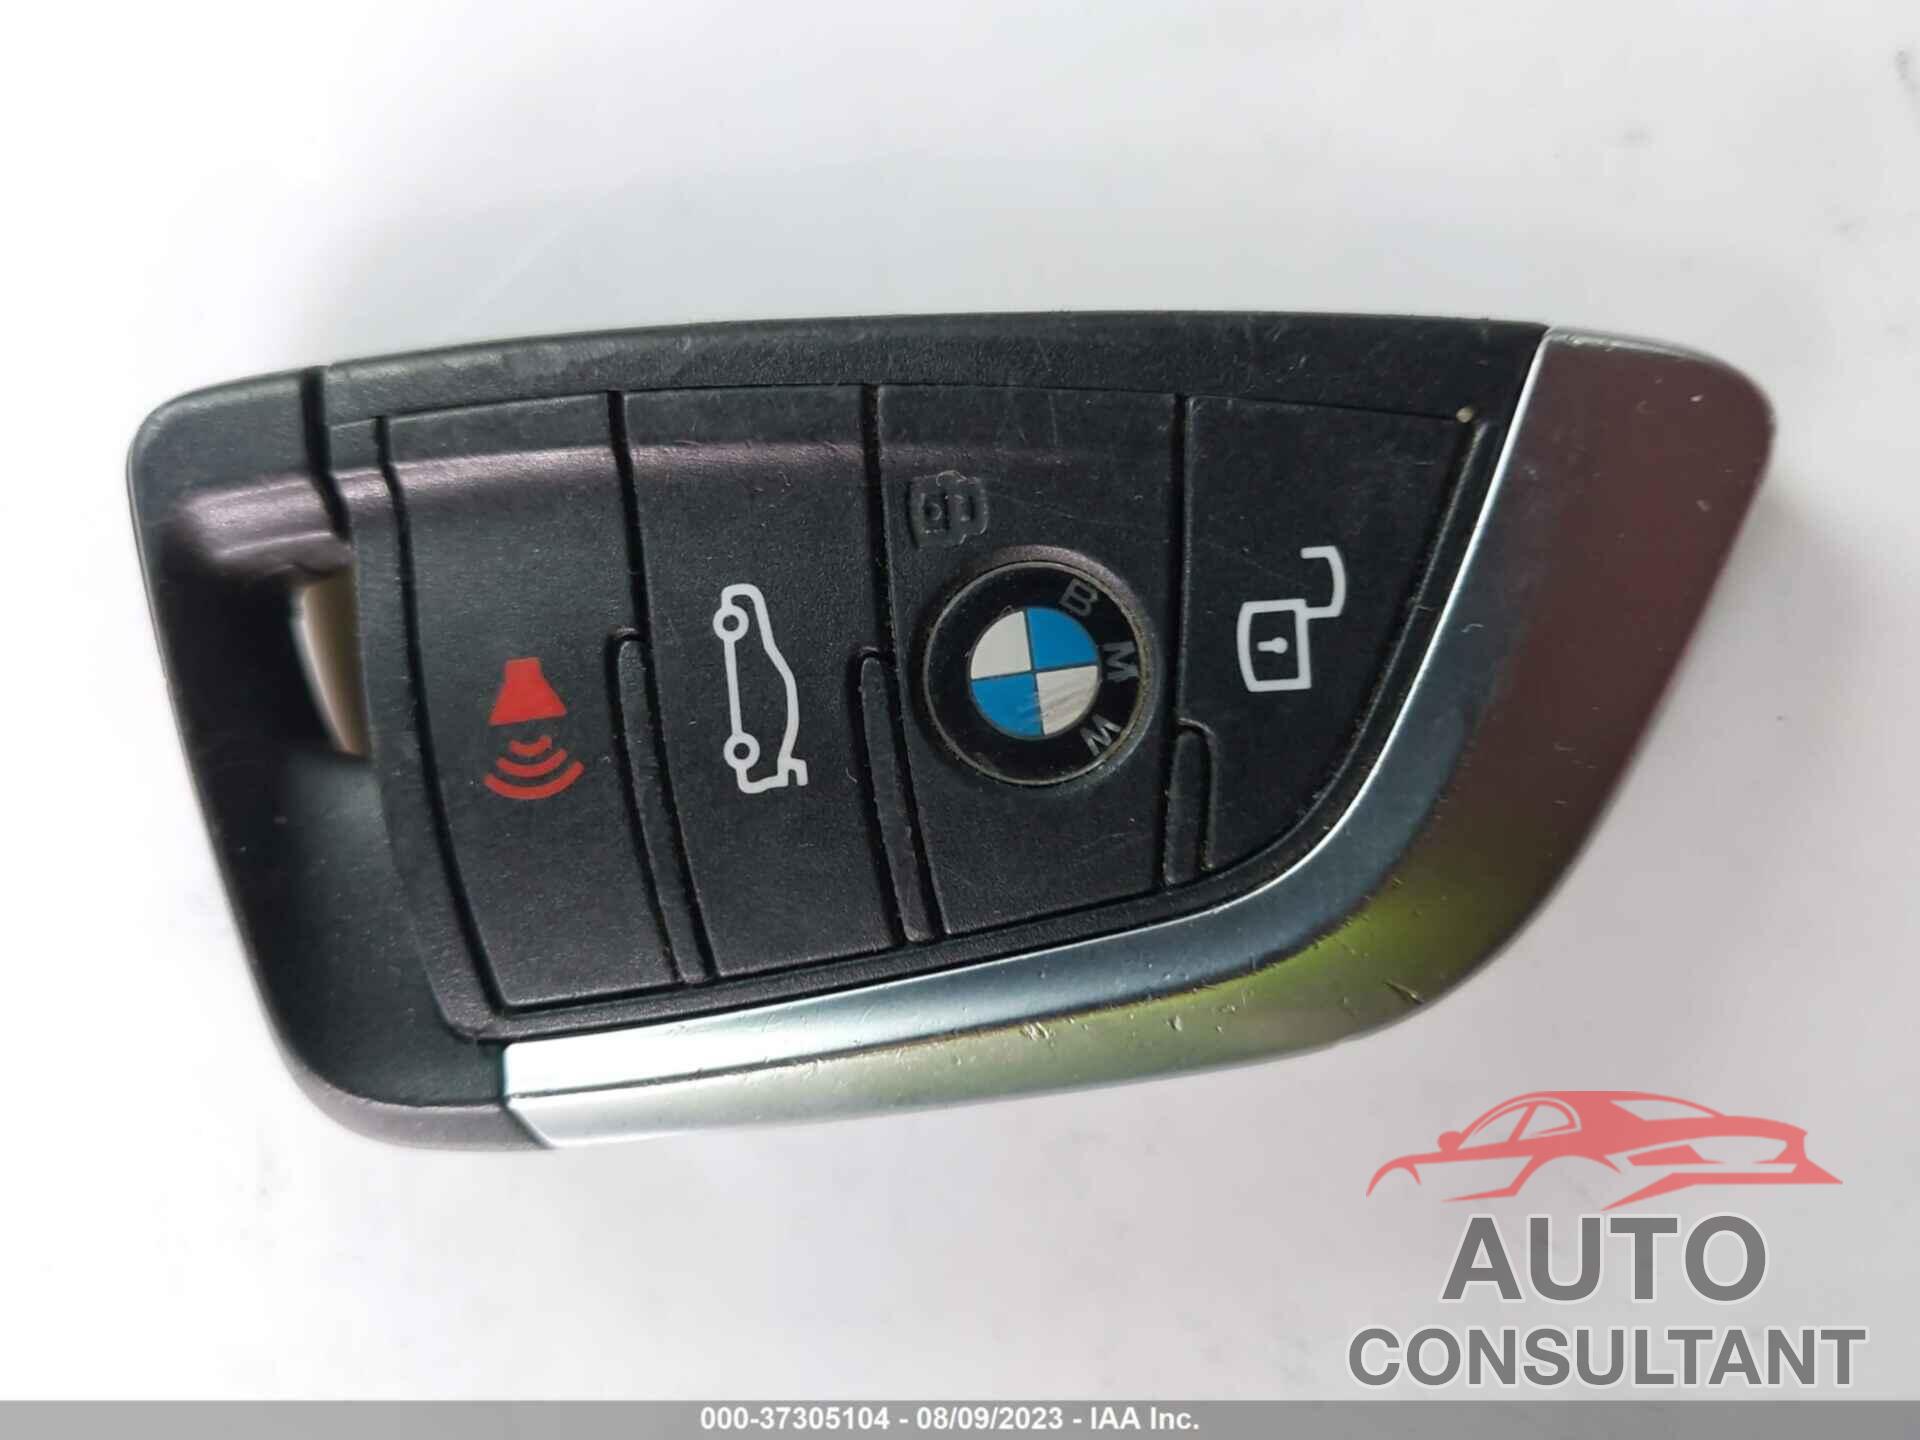 BMW 430I GRAN COUPE 2022 - WBA63AV01NFM02353